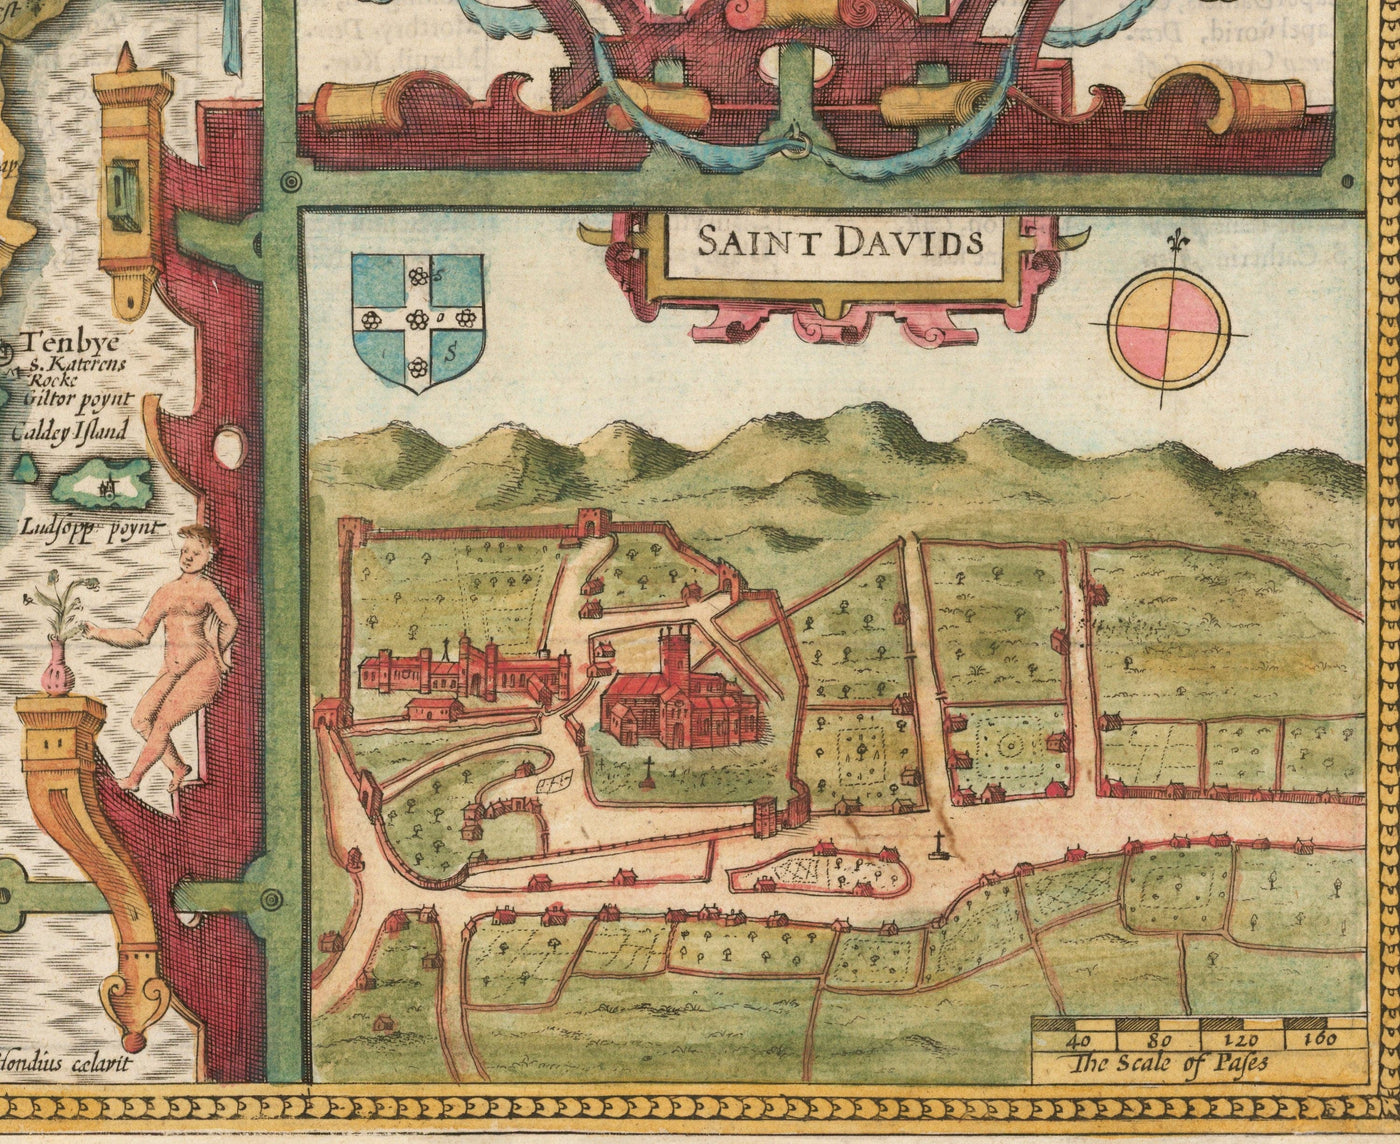 Alte Karte von Pembrokeshire Wales 1611 John Speed-Haverfordwest, St Davids, Fishguard